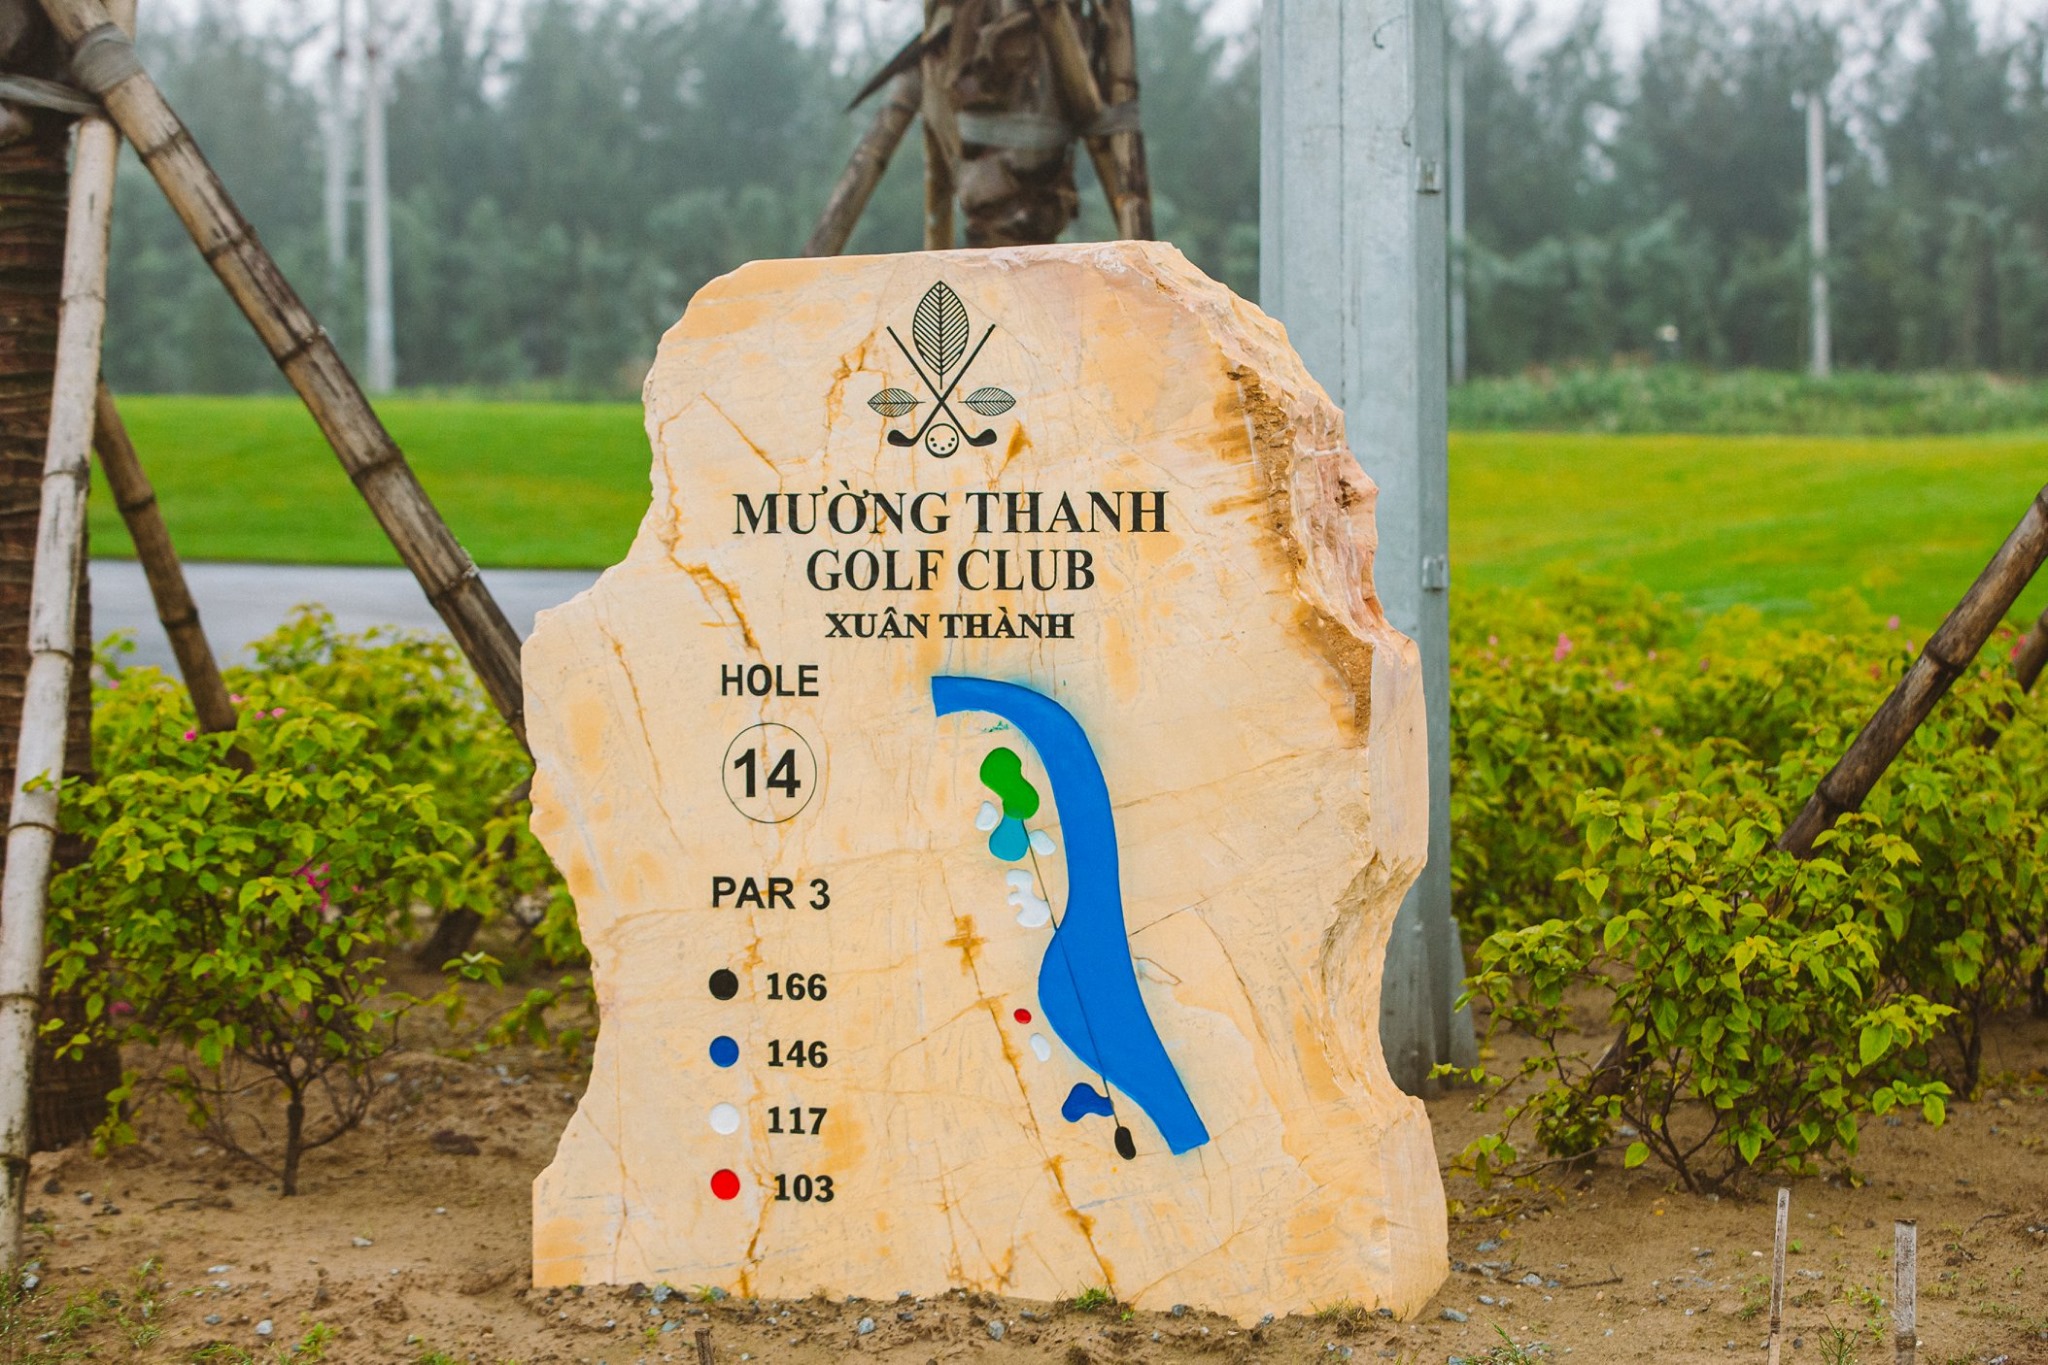 Muong Thanh Golf Club Xuan Thanh